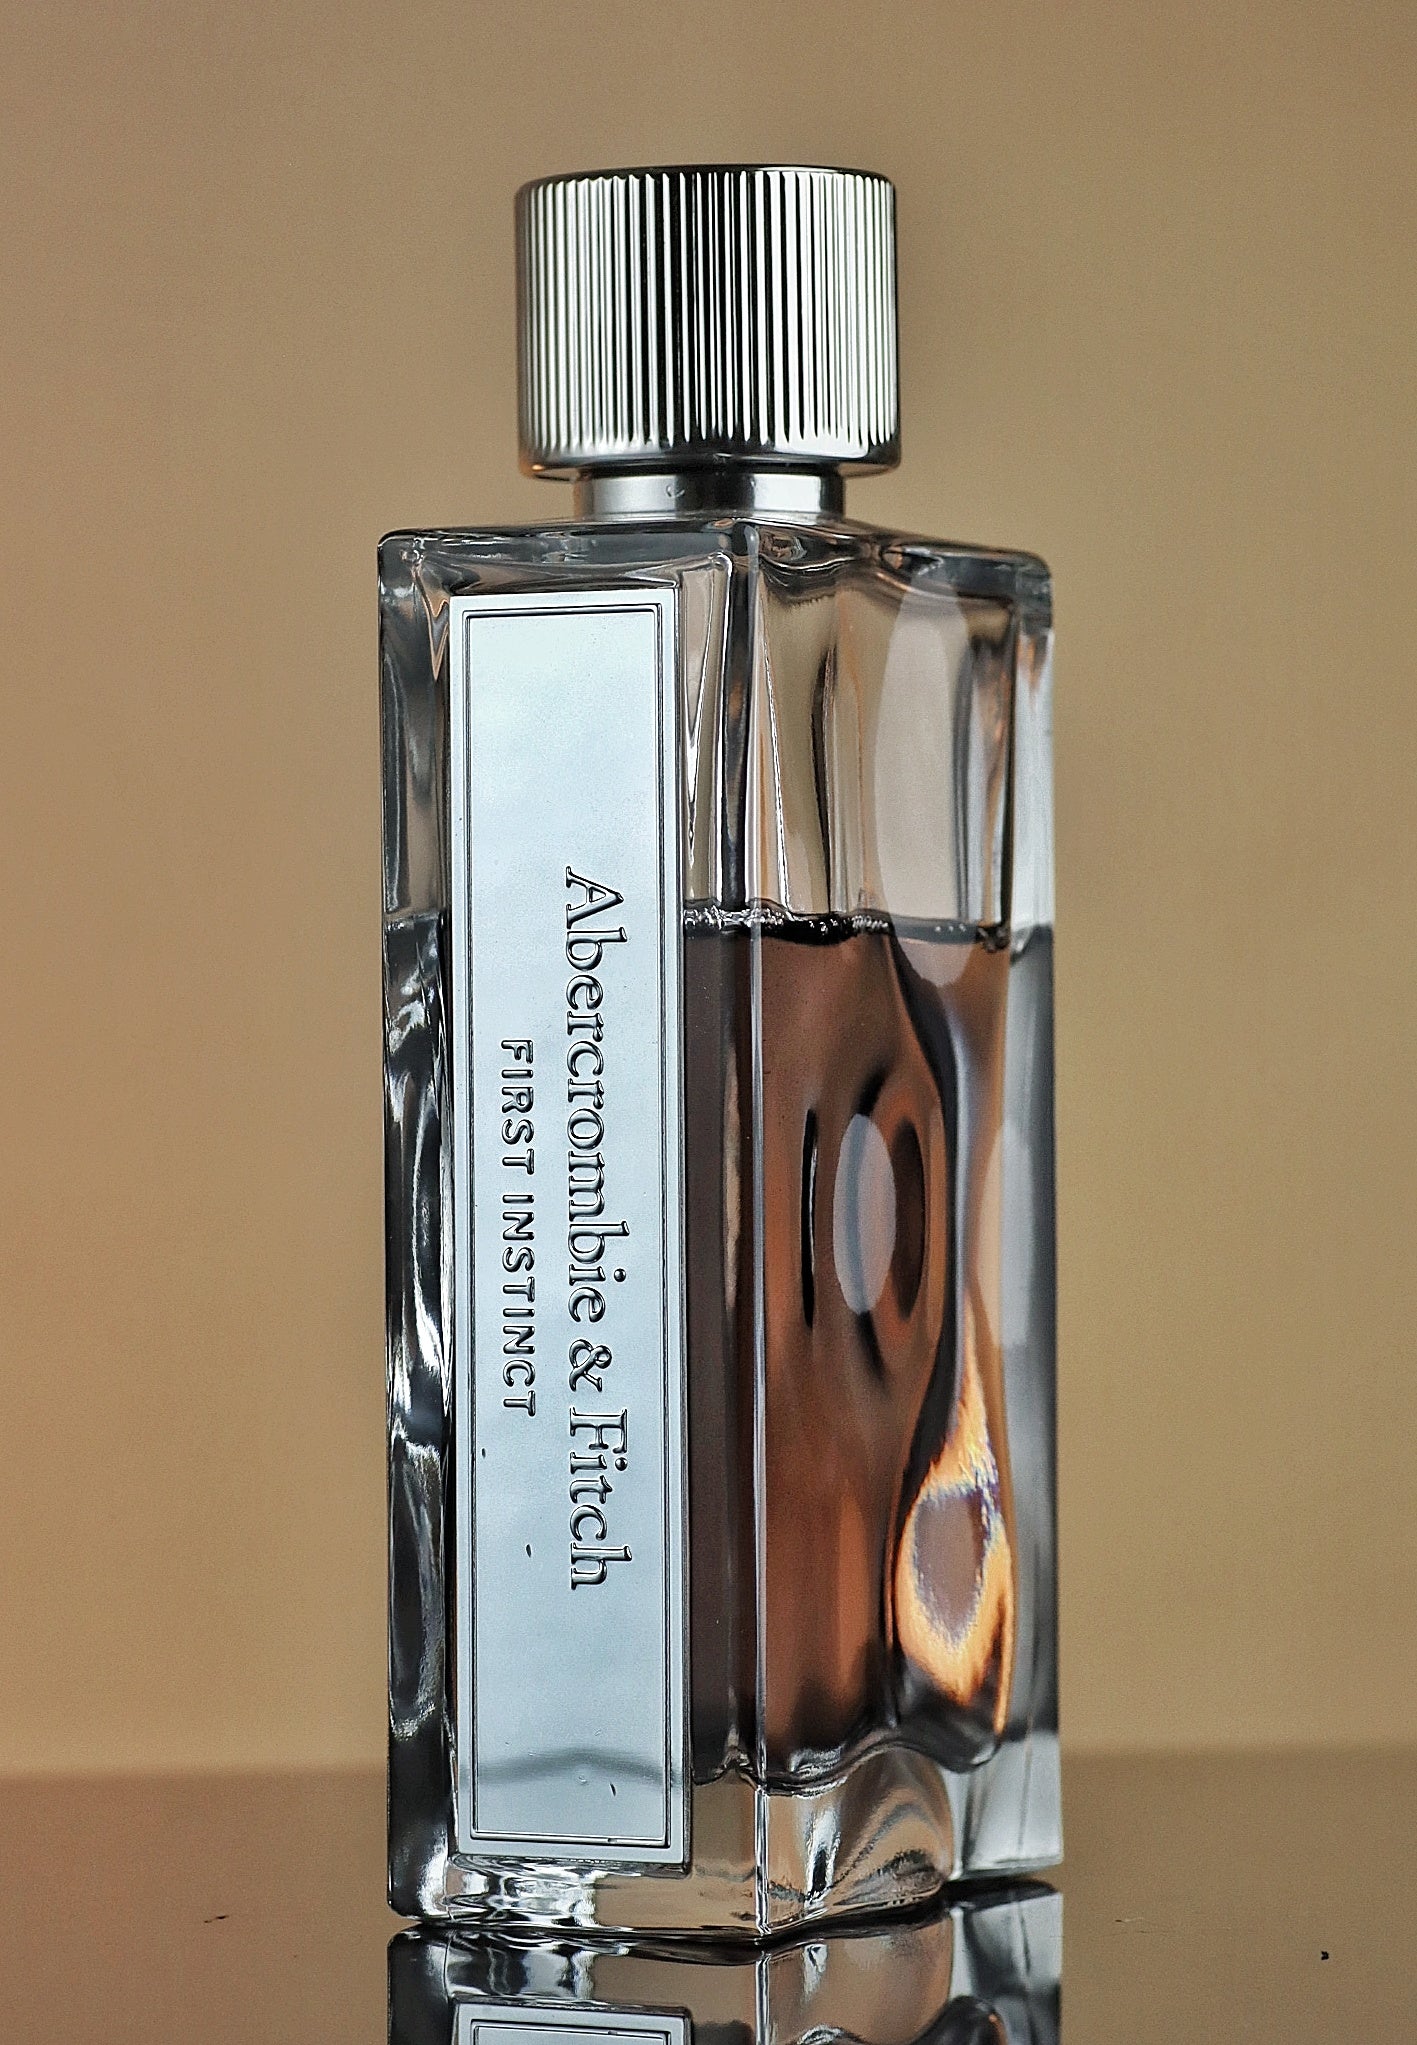 LV Fragrance Samples – Visionary Fragrances